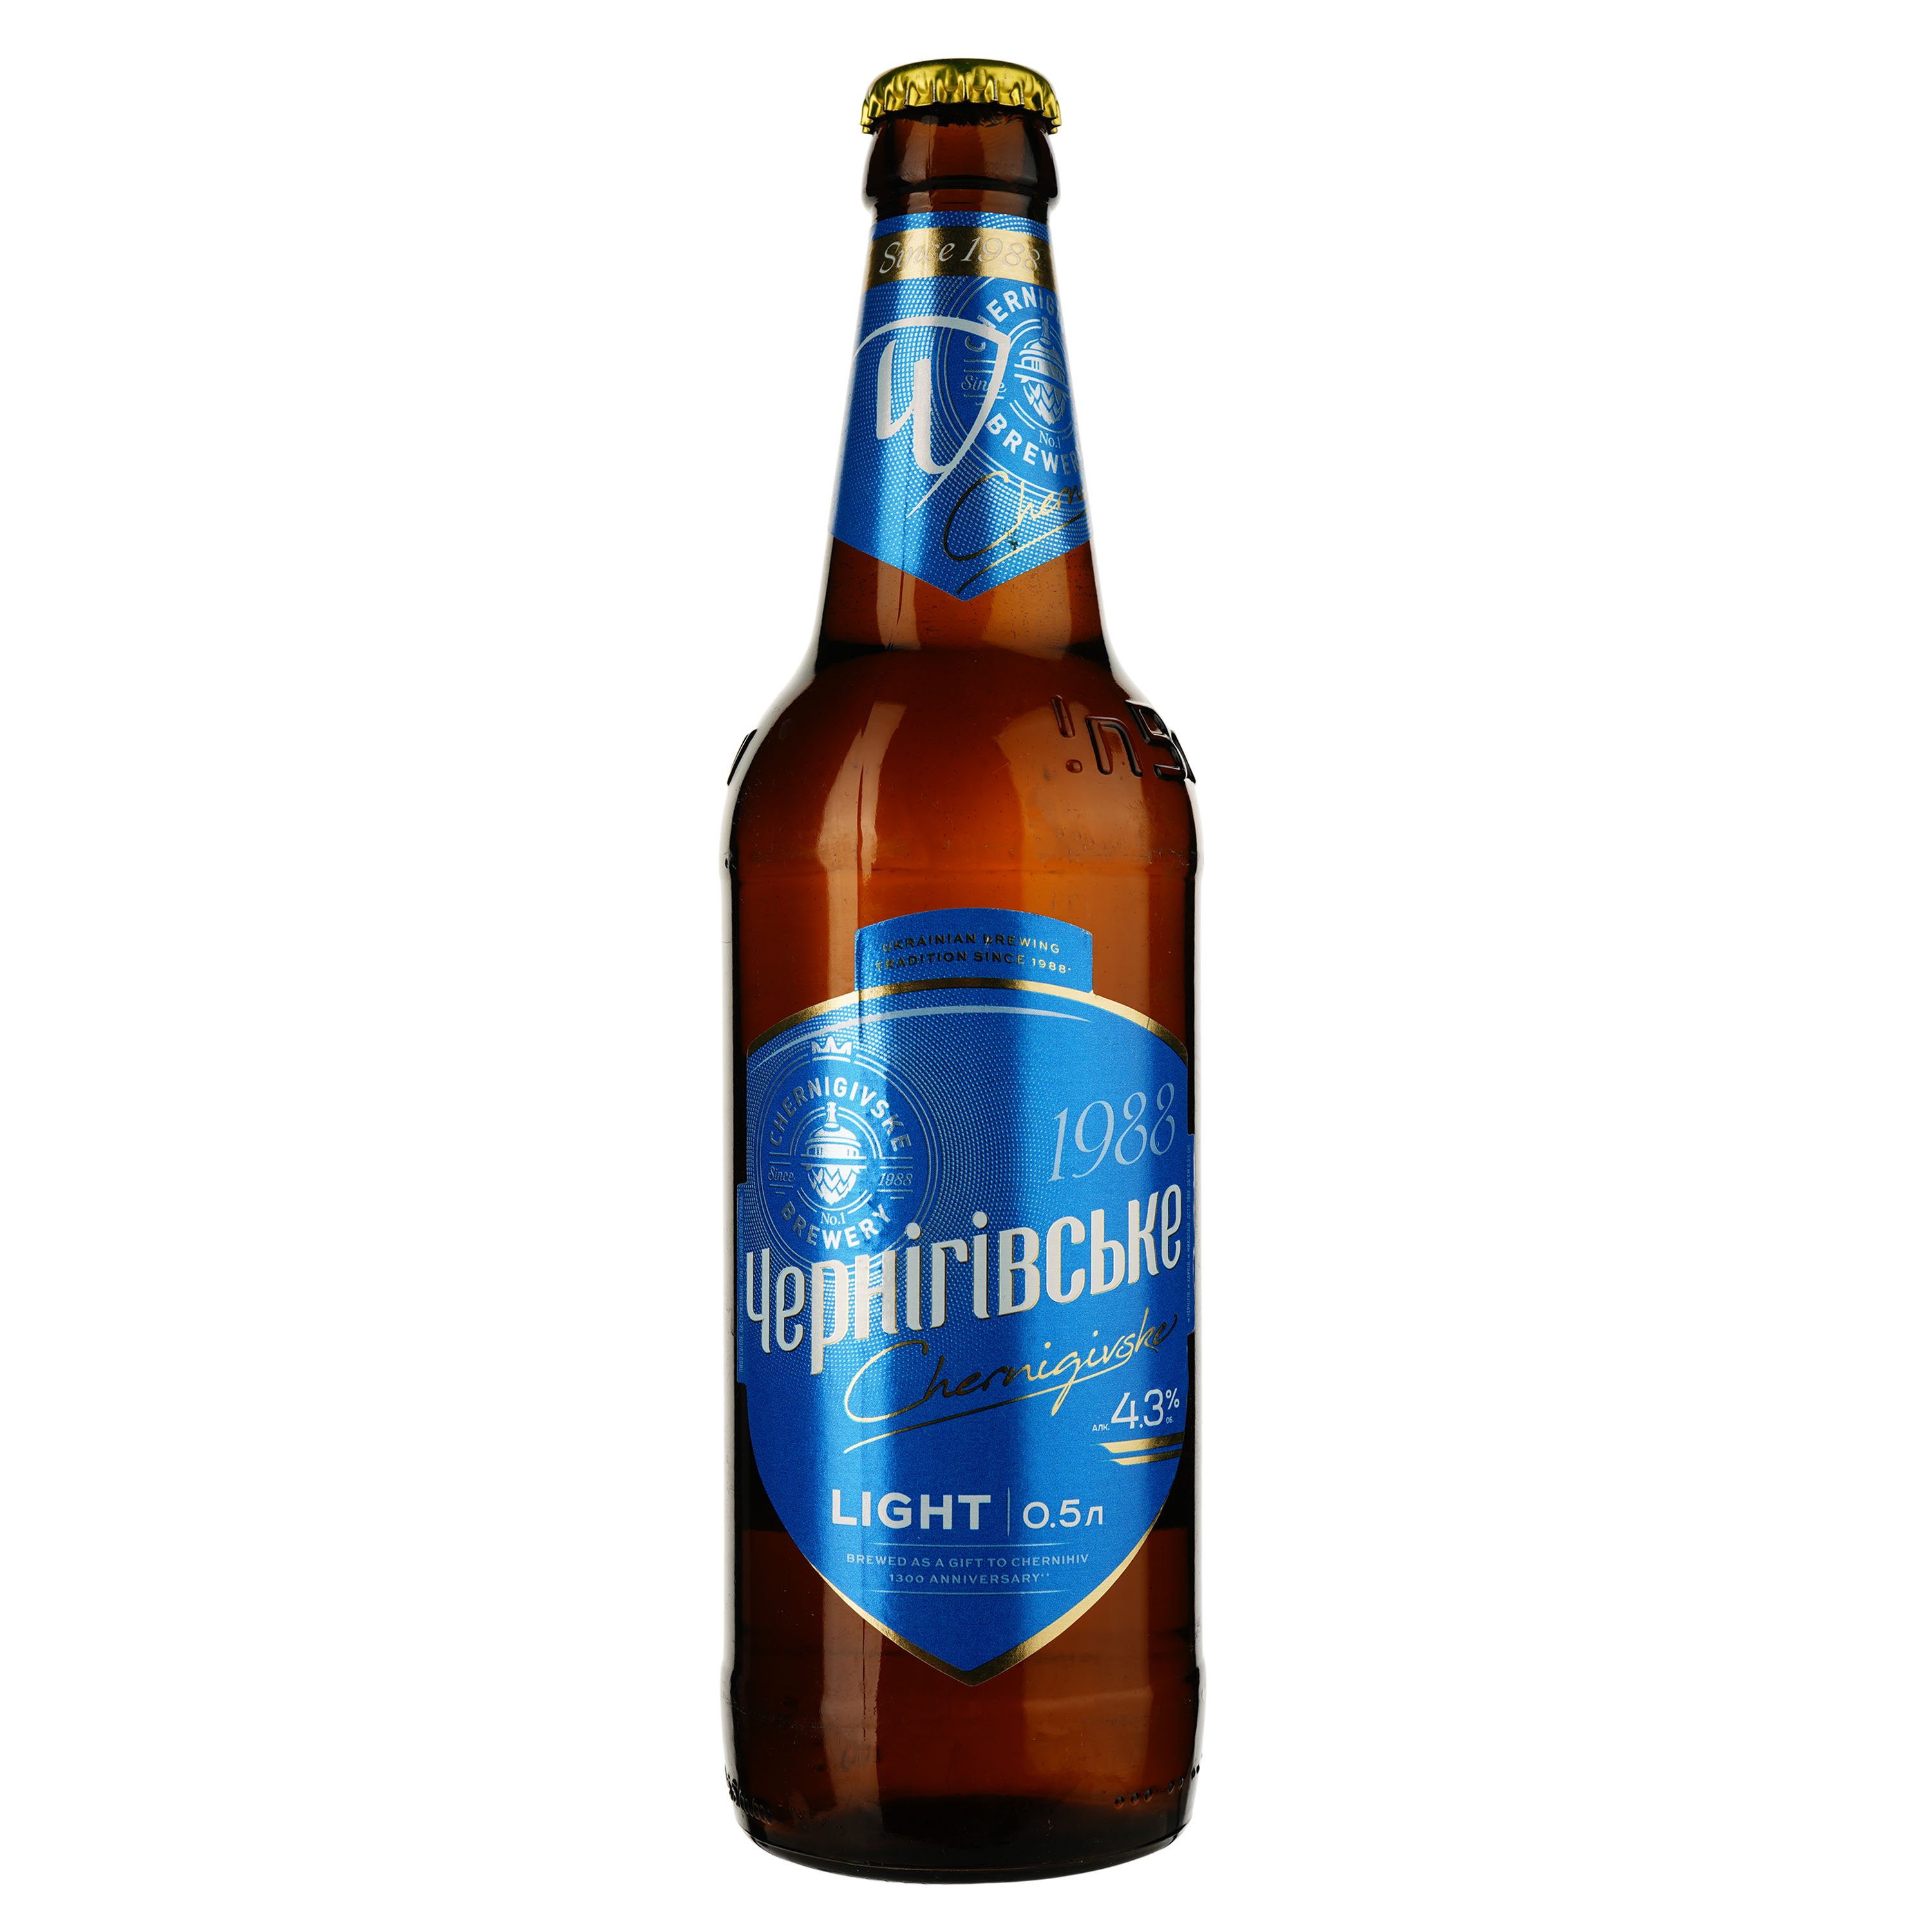 Пиво Чернігівське Light, светлое, 4,3%, 0,5 л - фото 1